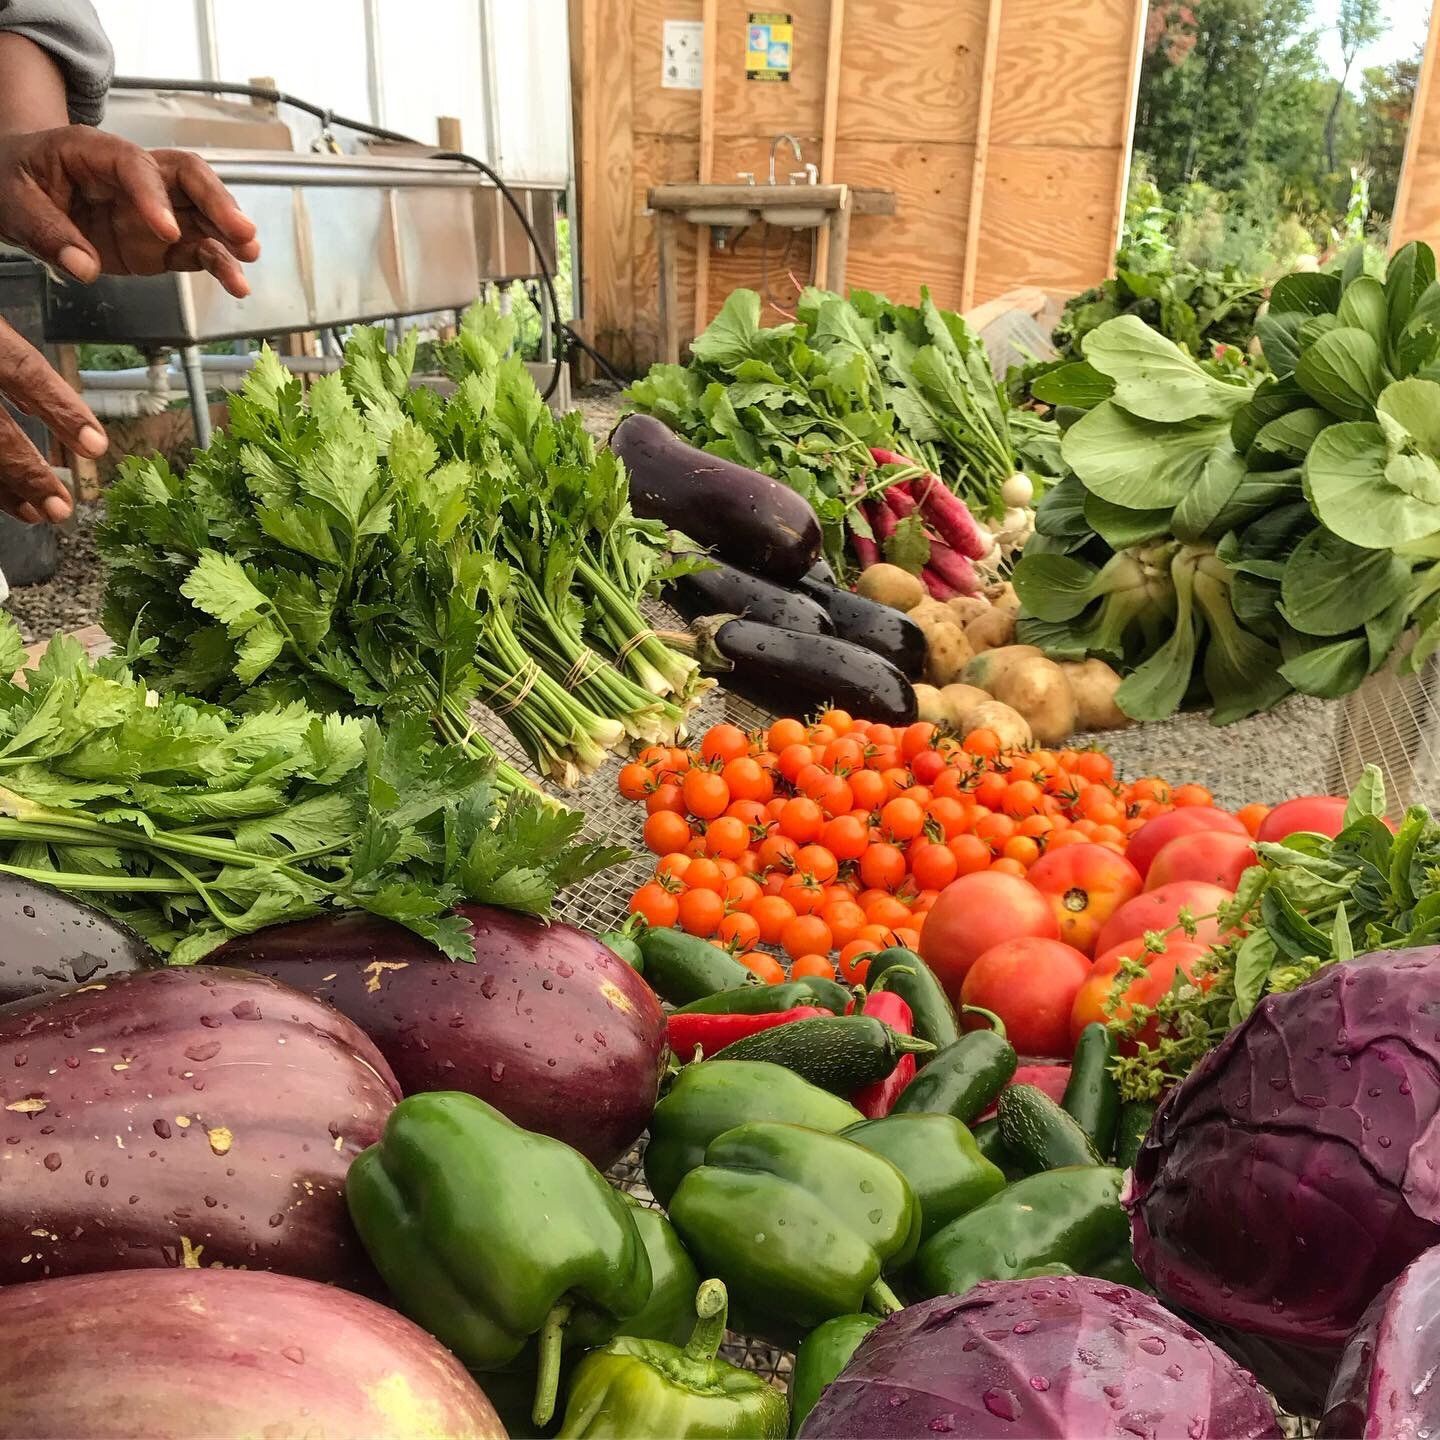 Previous Happening: Summer Week 13: Despite the rain, we've got veggies!